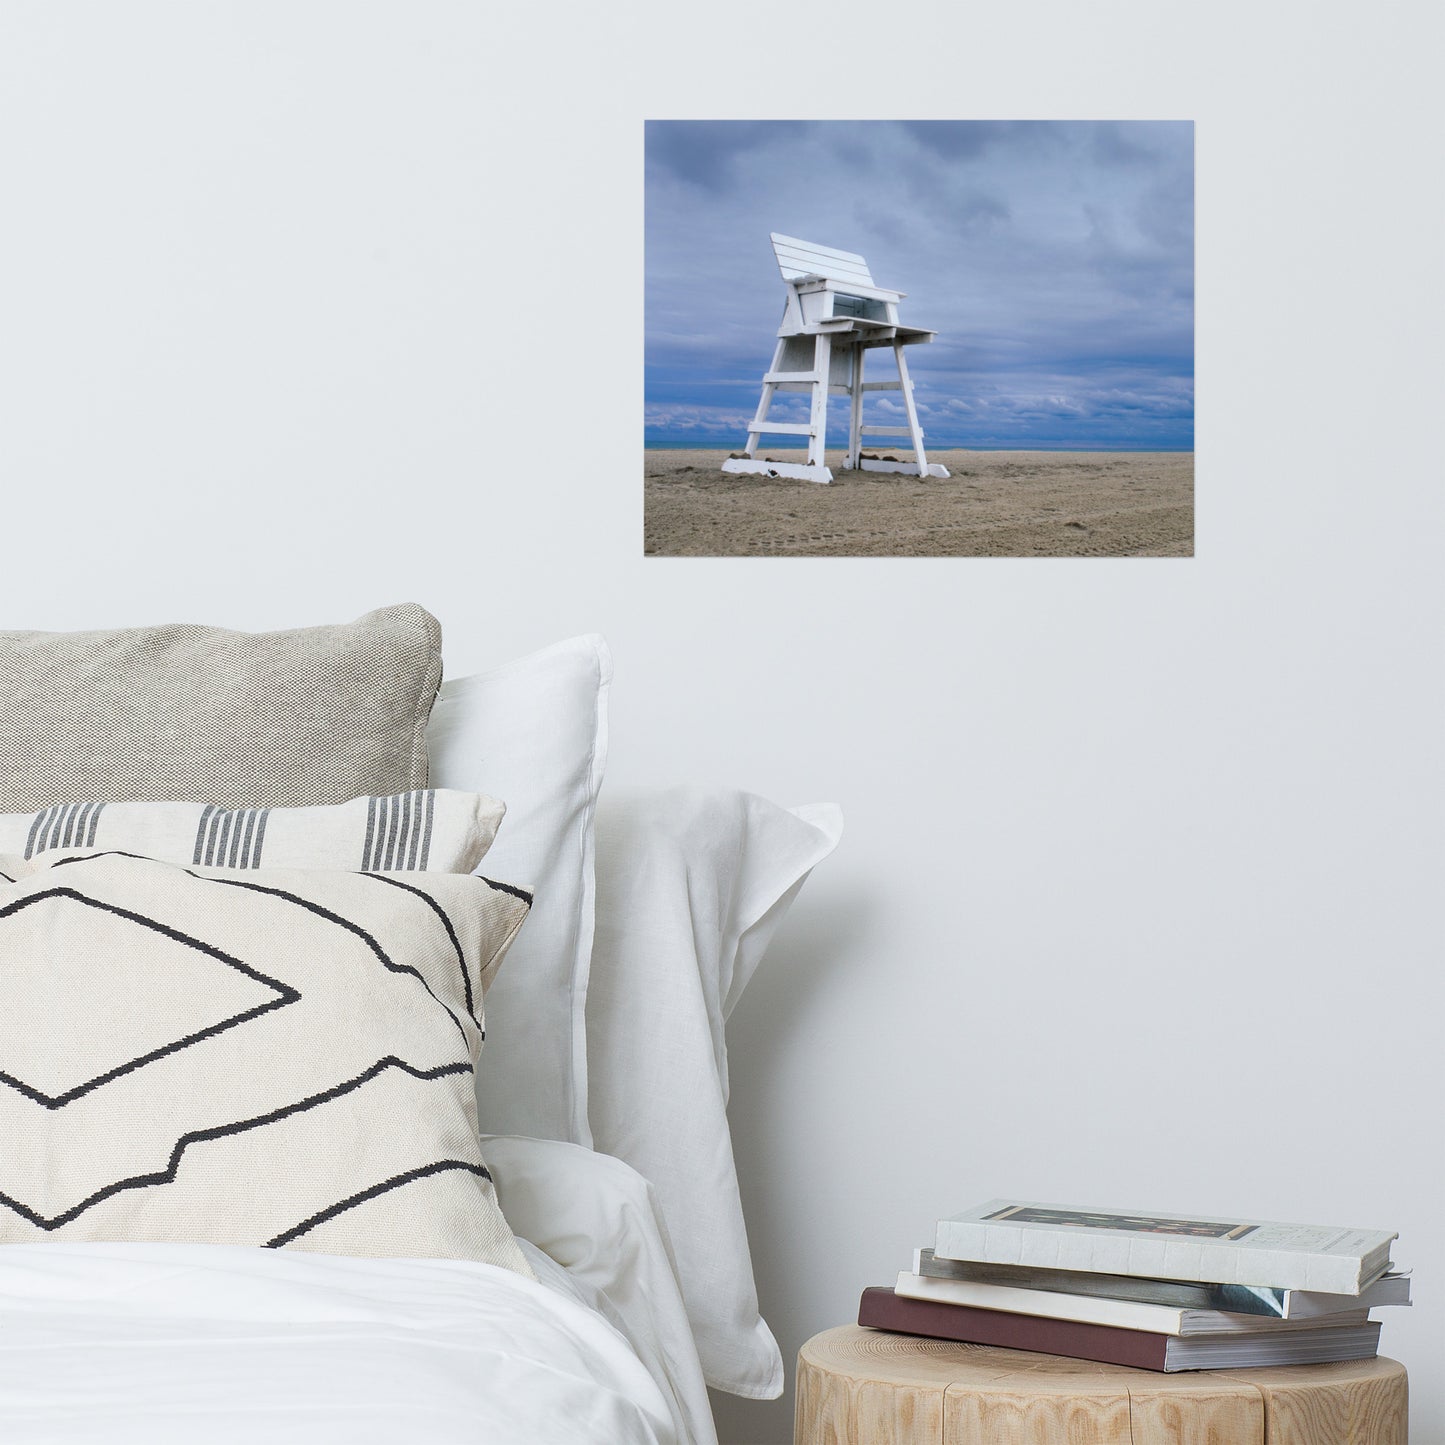 Bedroom Above Bed Decor: Stormy Skies - Beach / Coastal / Seascape Nature / Landscape Photograph Loose / Unframed Wall Art Print - Artwork